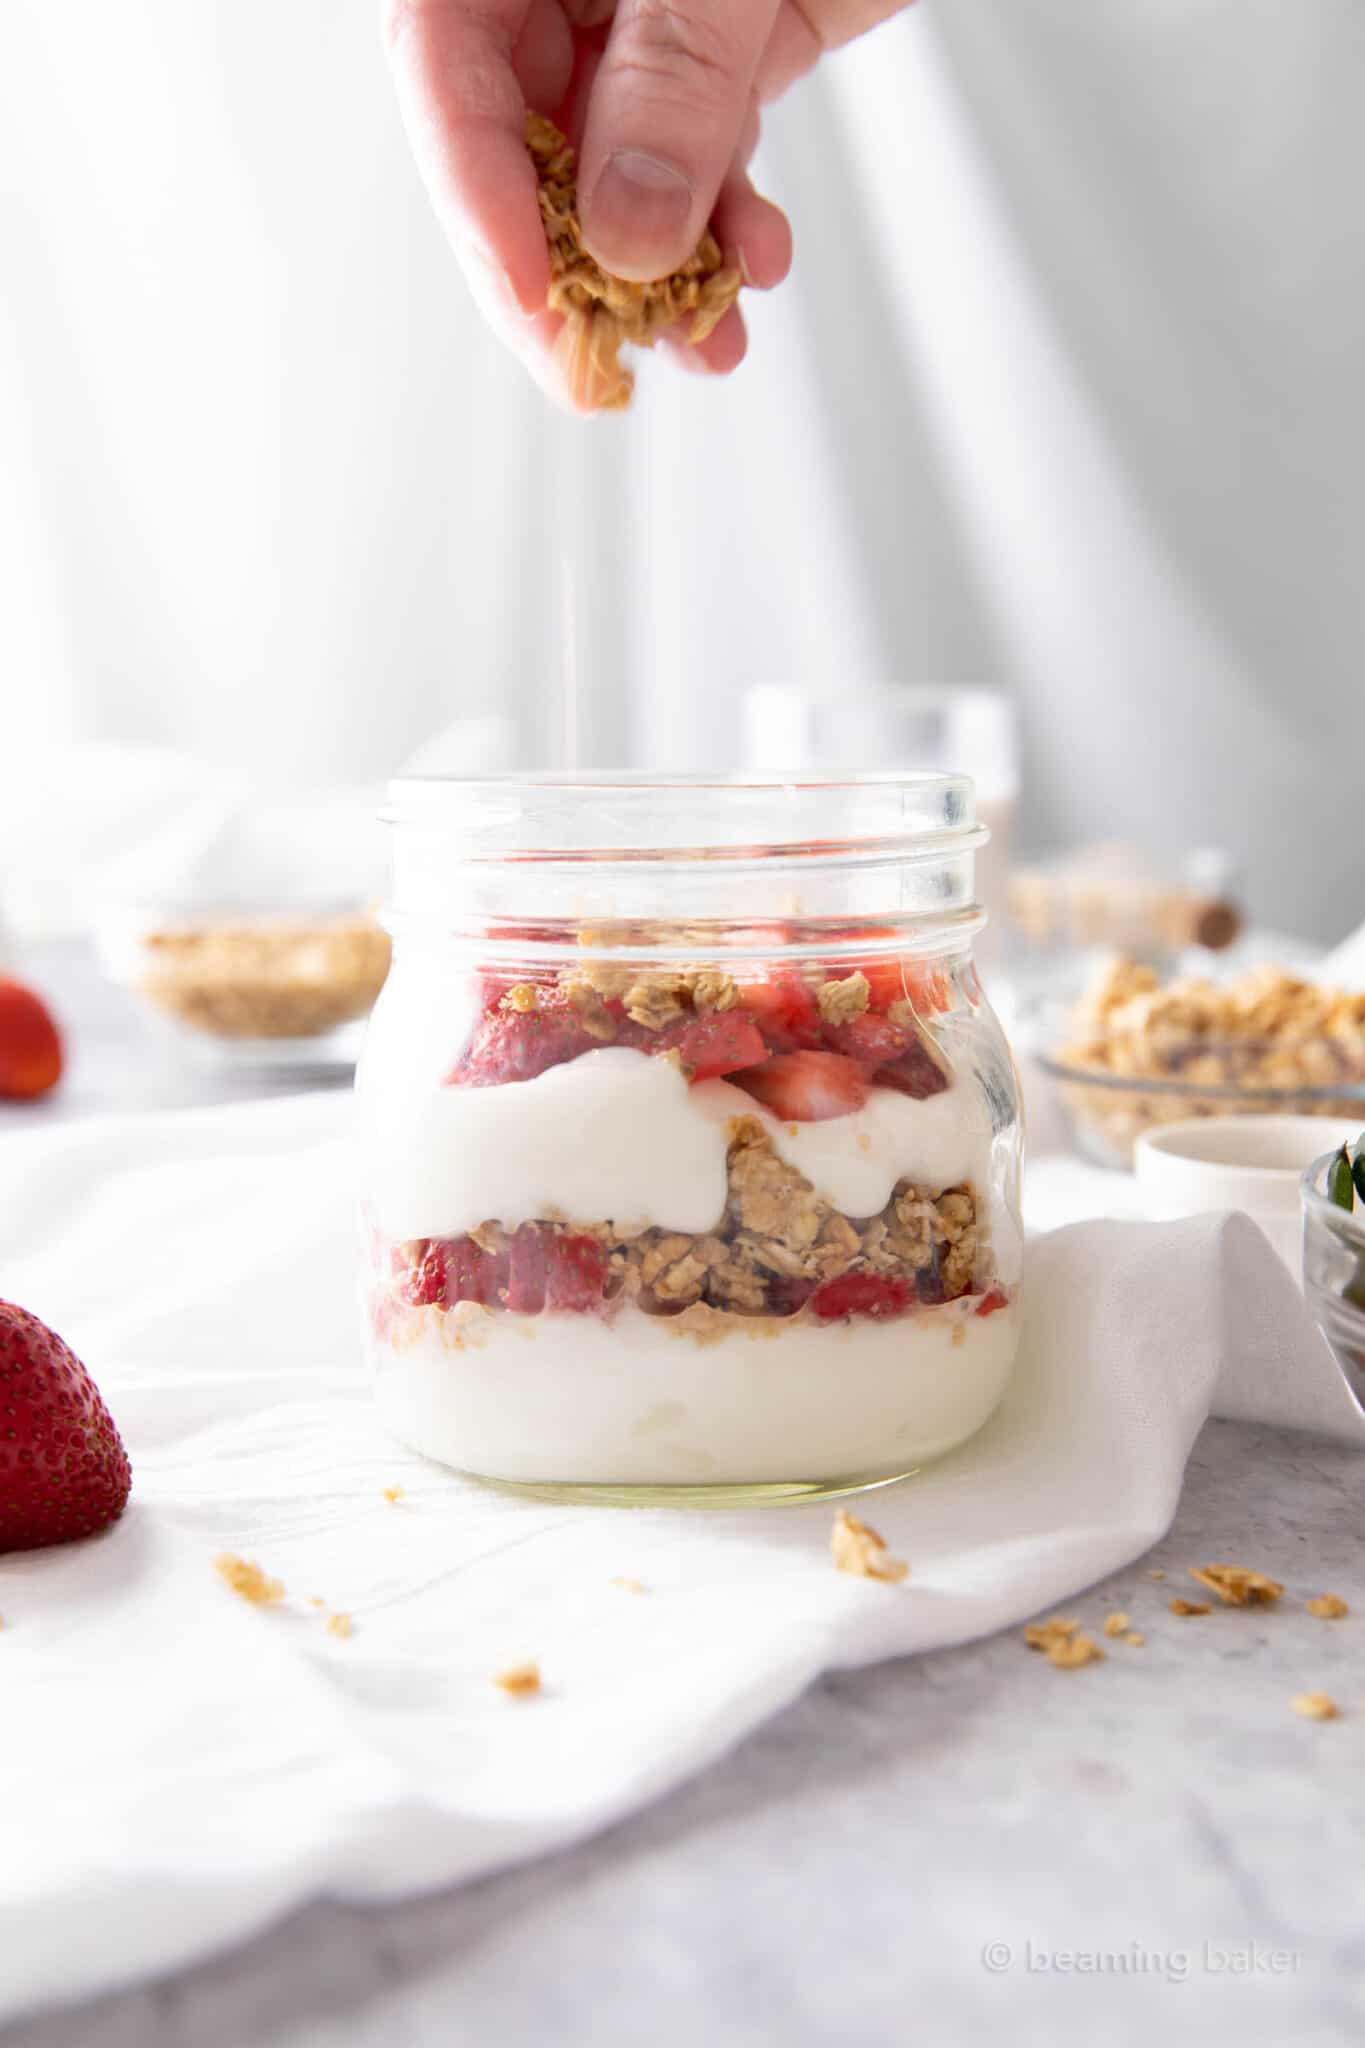 Strawberry Yogurt Parfait - Beaming Baker